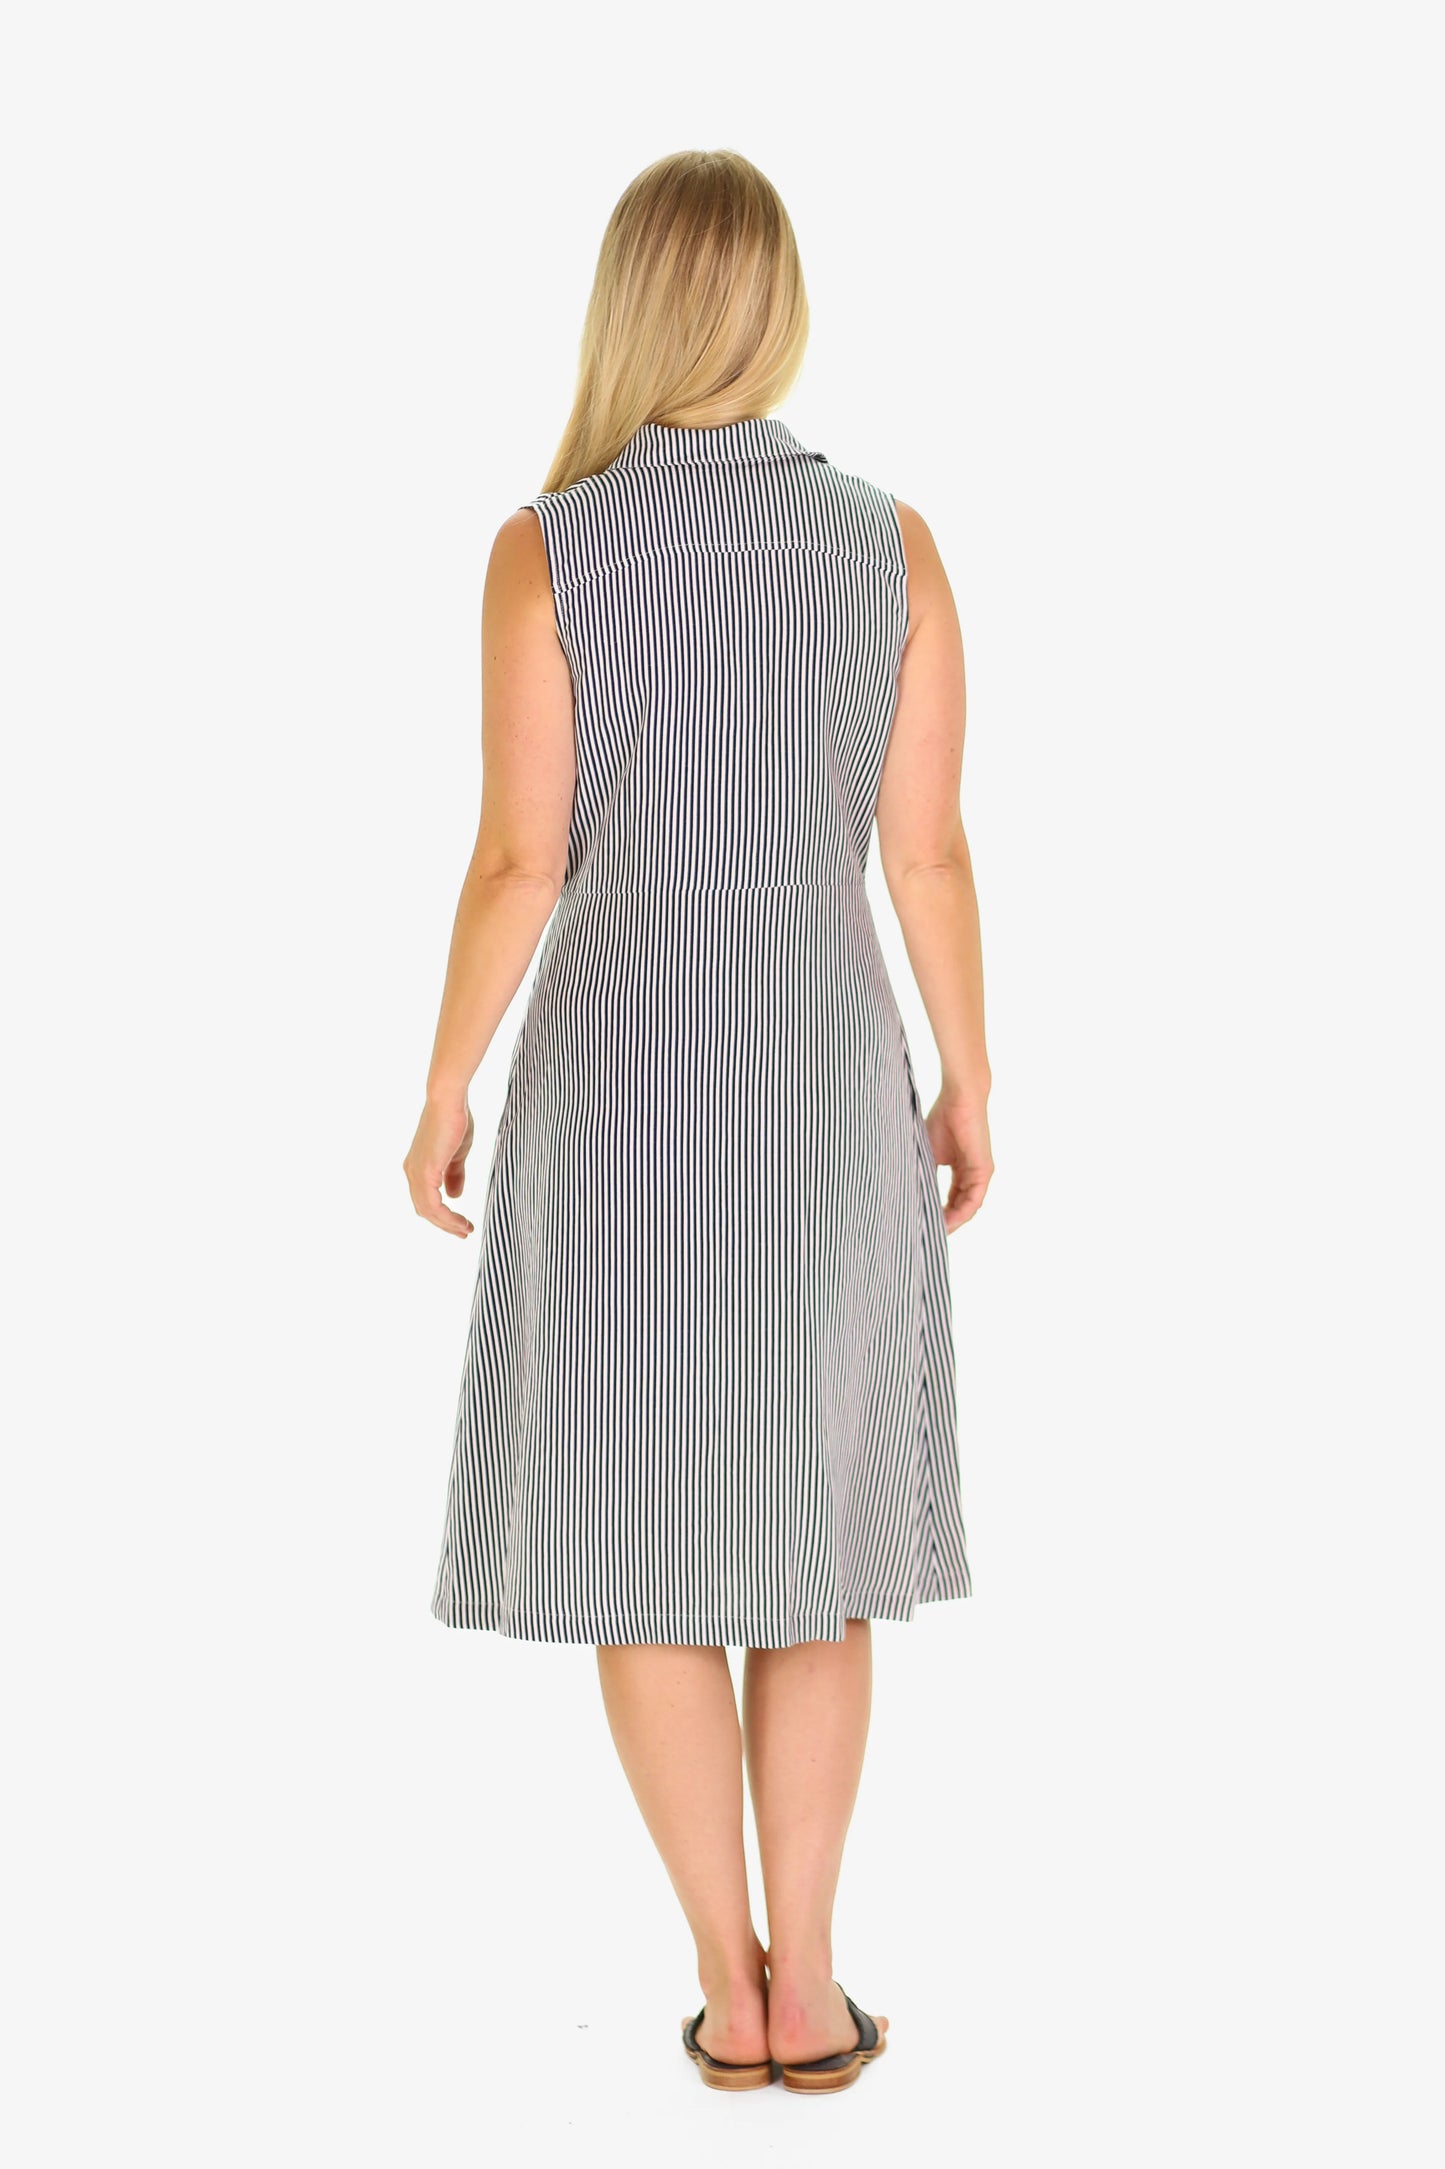 Davie Dress in Linen Stripe - The French Shoppe